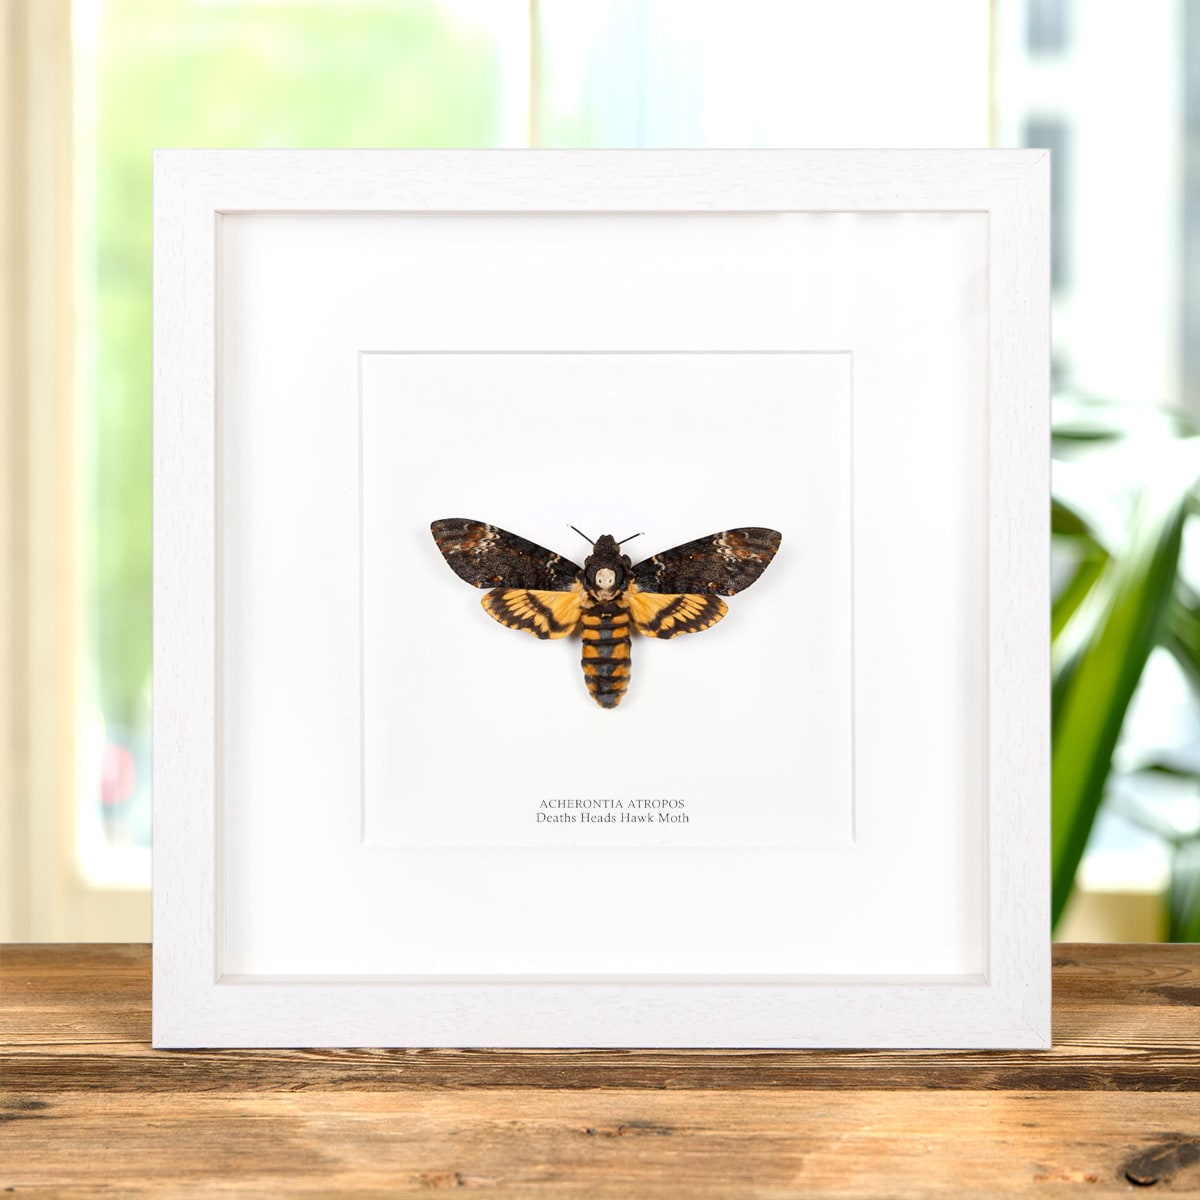 Death's Head Moth in Box Frame (Female)